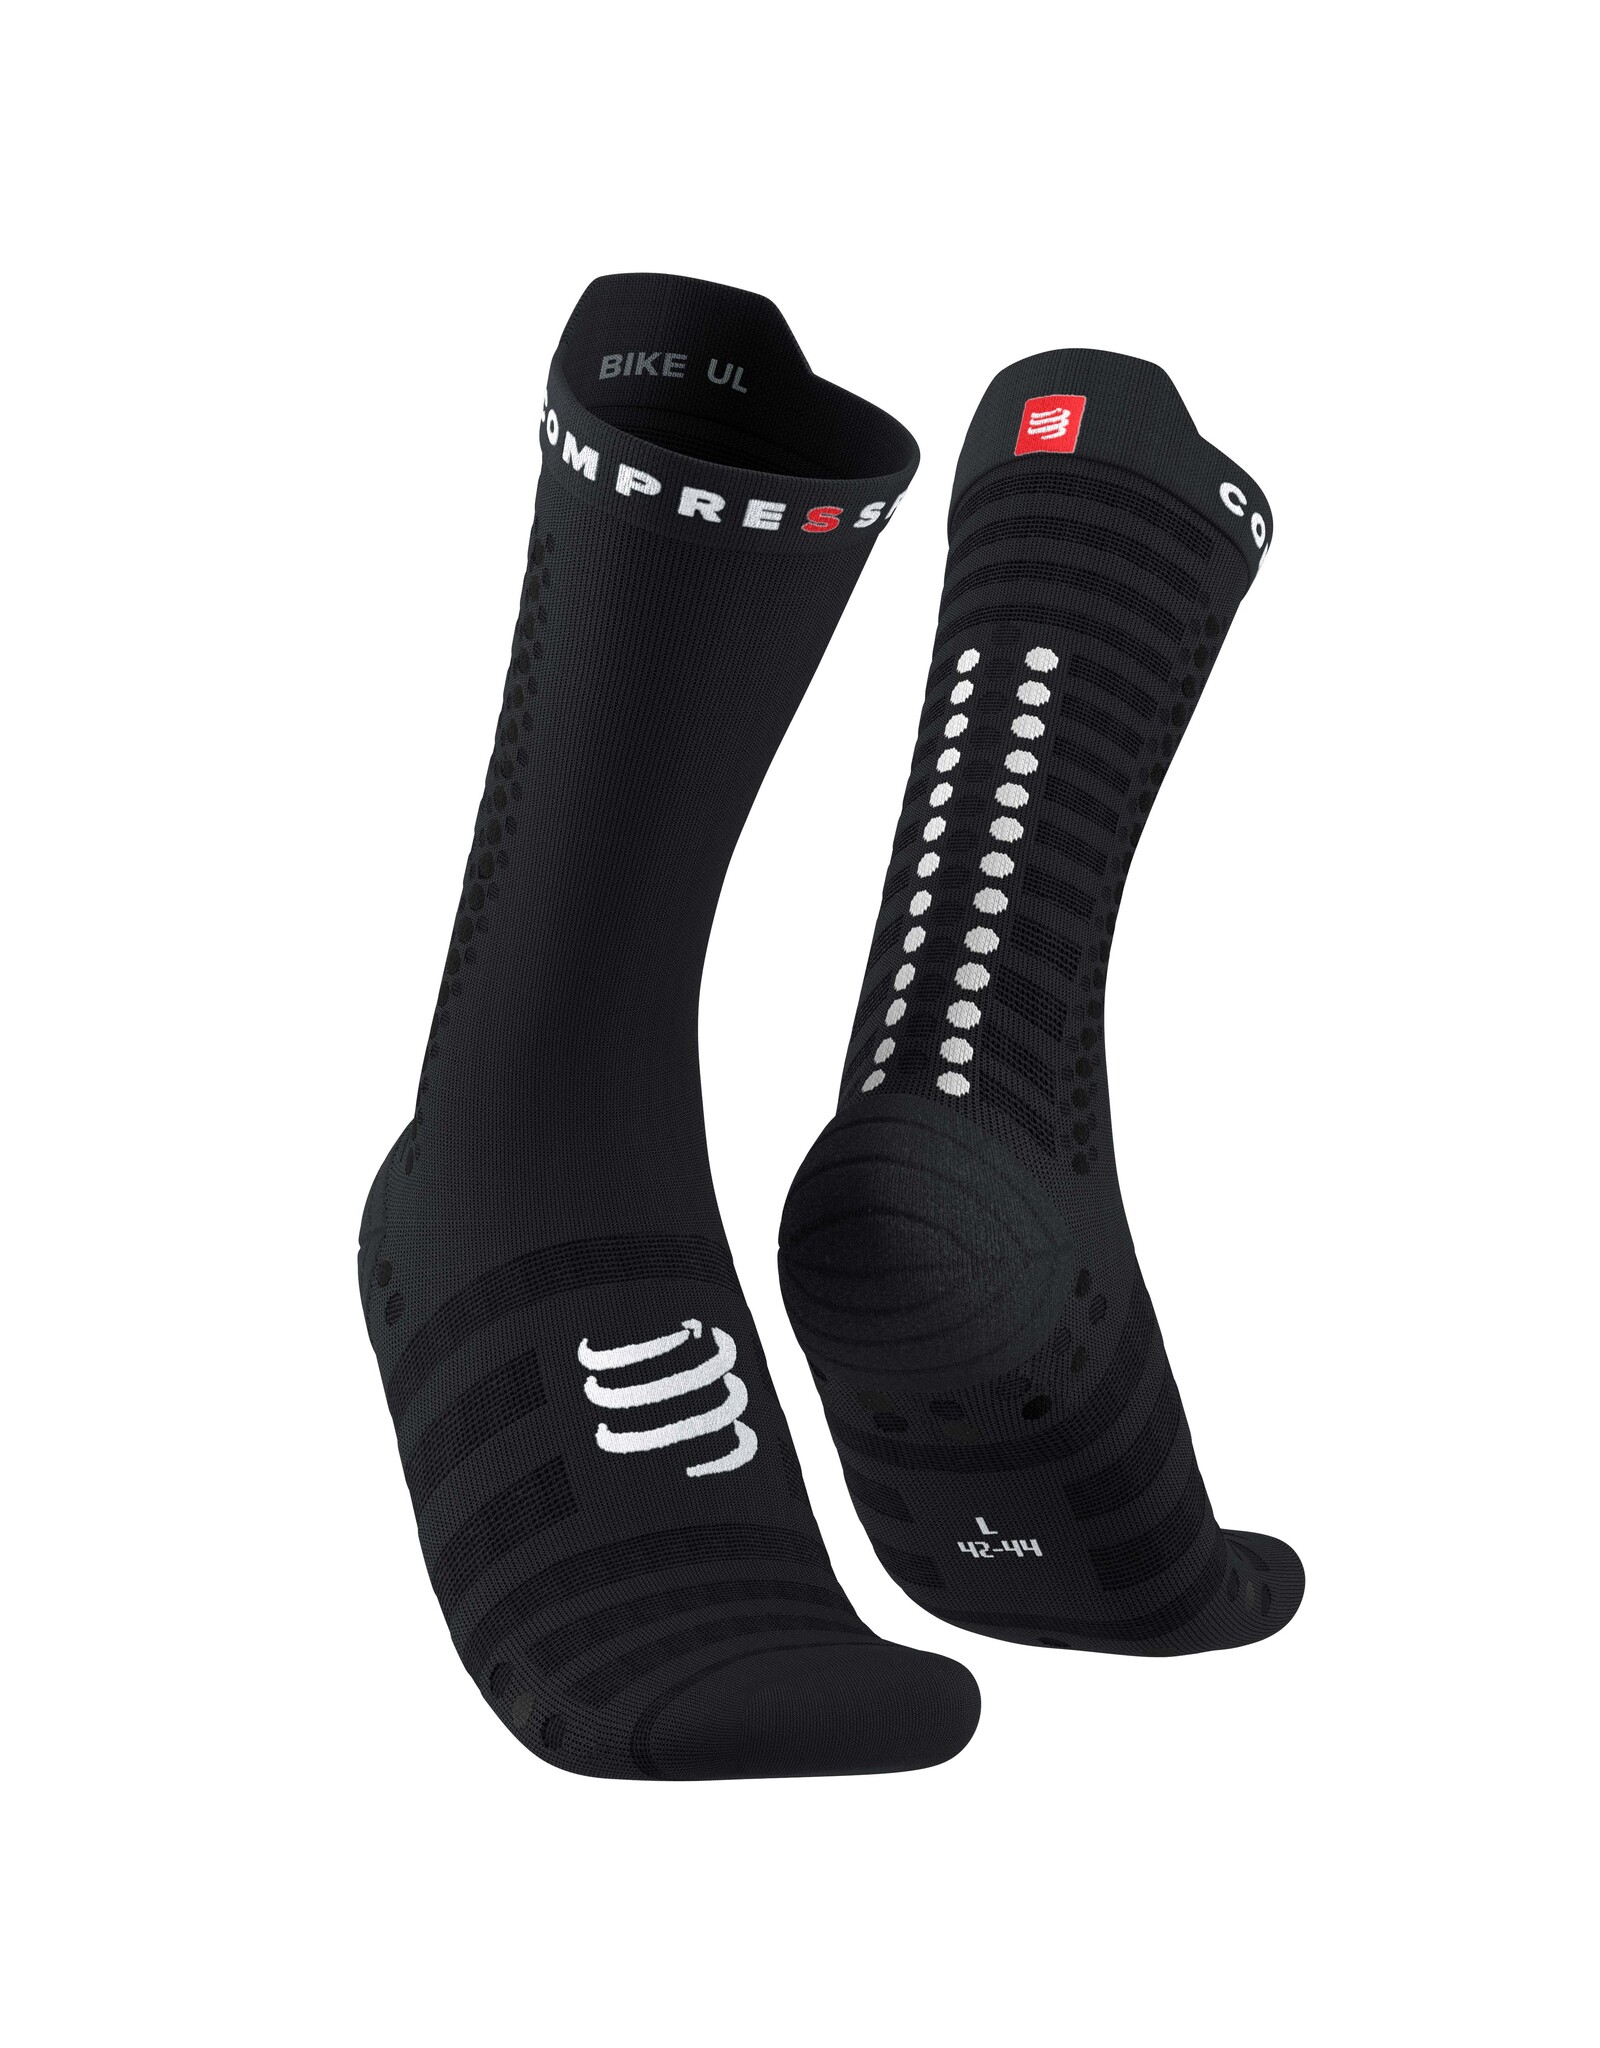 Compressport Pro Racing Socks v4.0 Ultralight Bike - Black/White